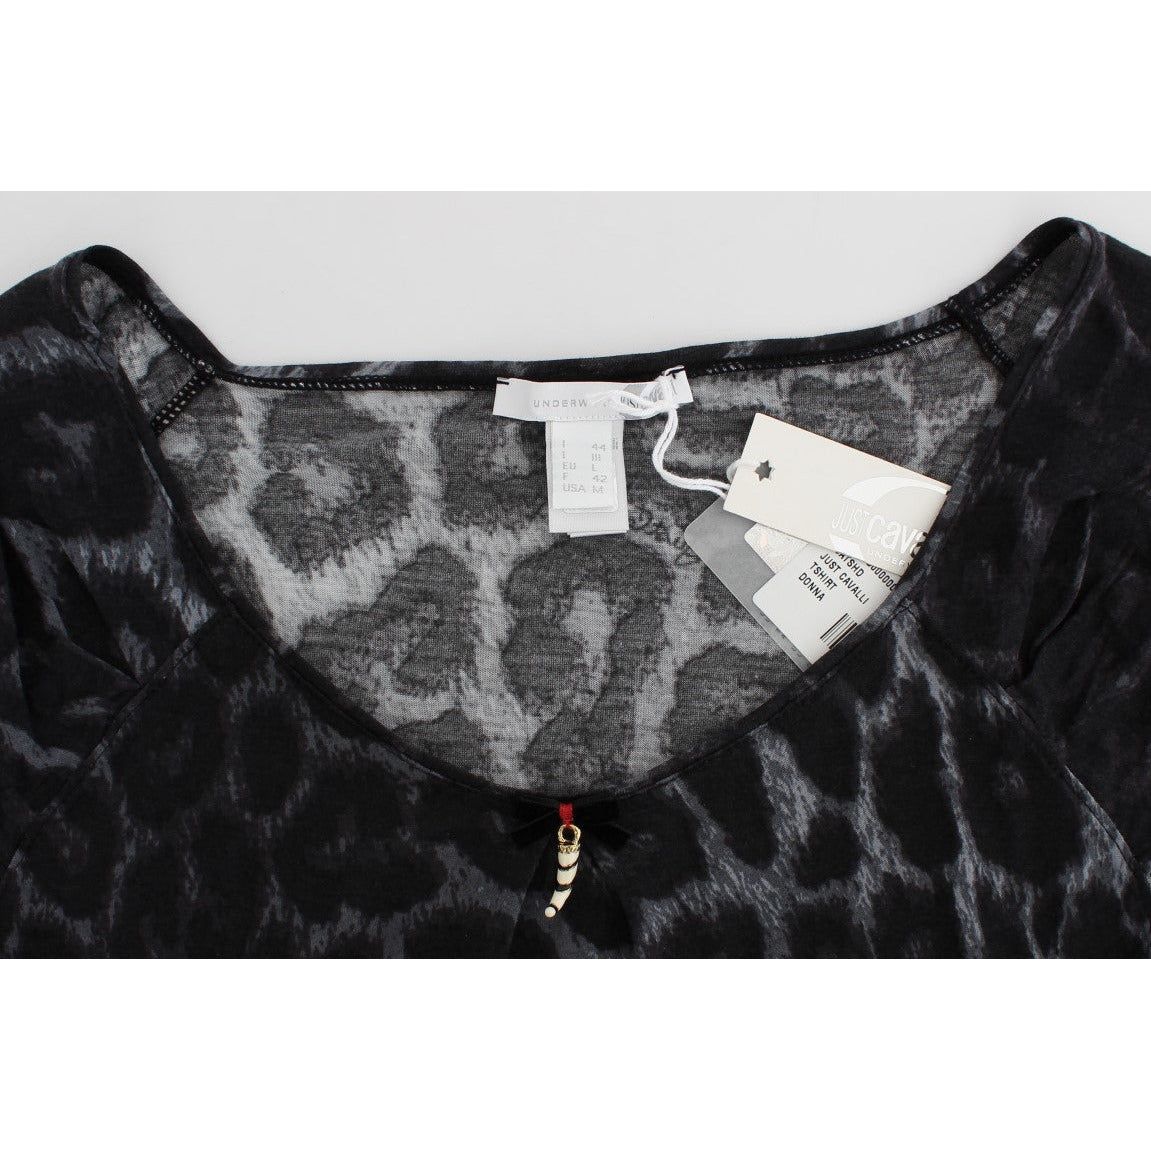 Cavalli Chic Leopard Modal Top by Cavalli gray-leopard-modal-t-shirt-blouse-top